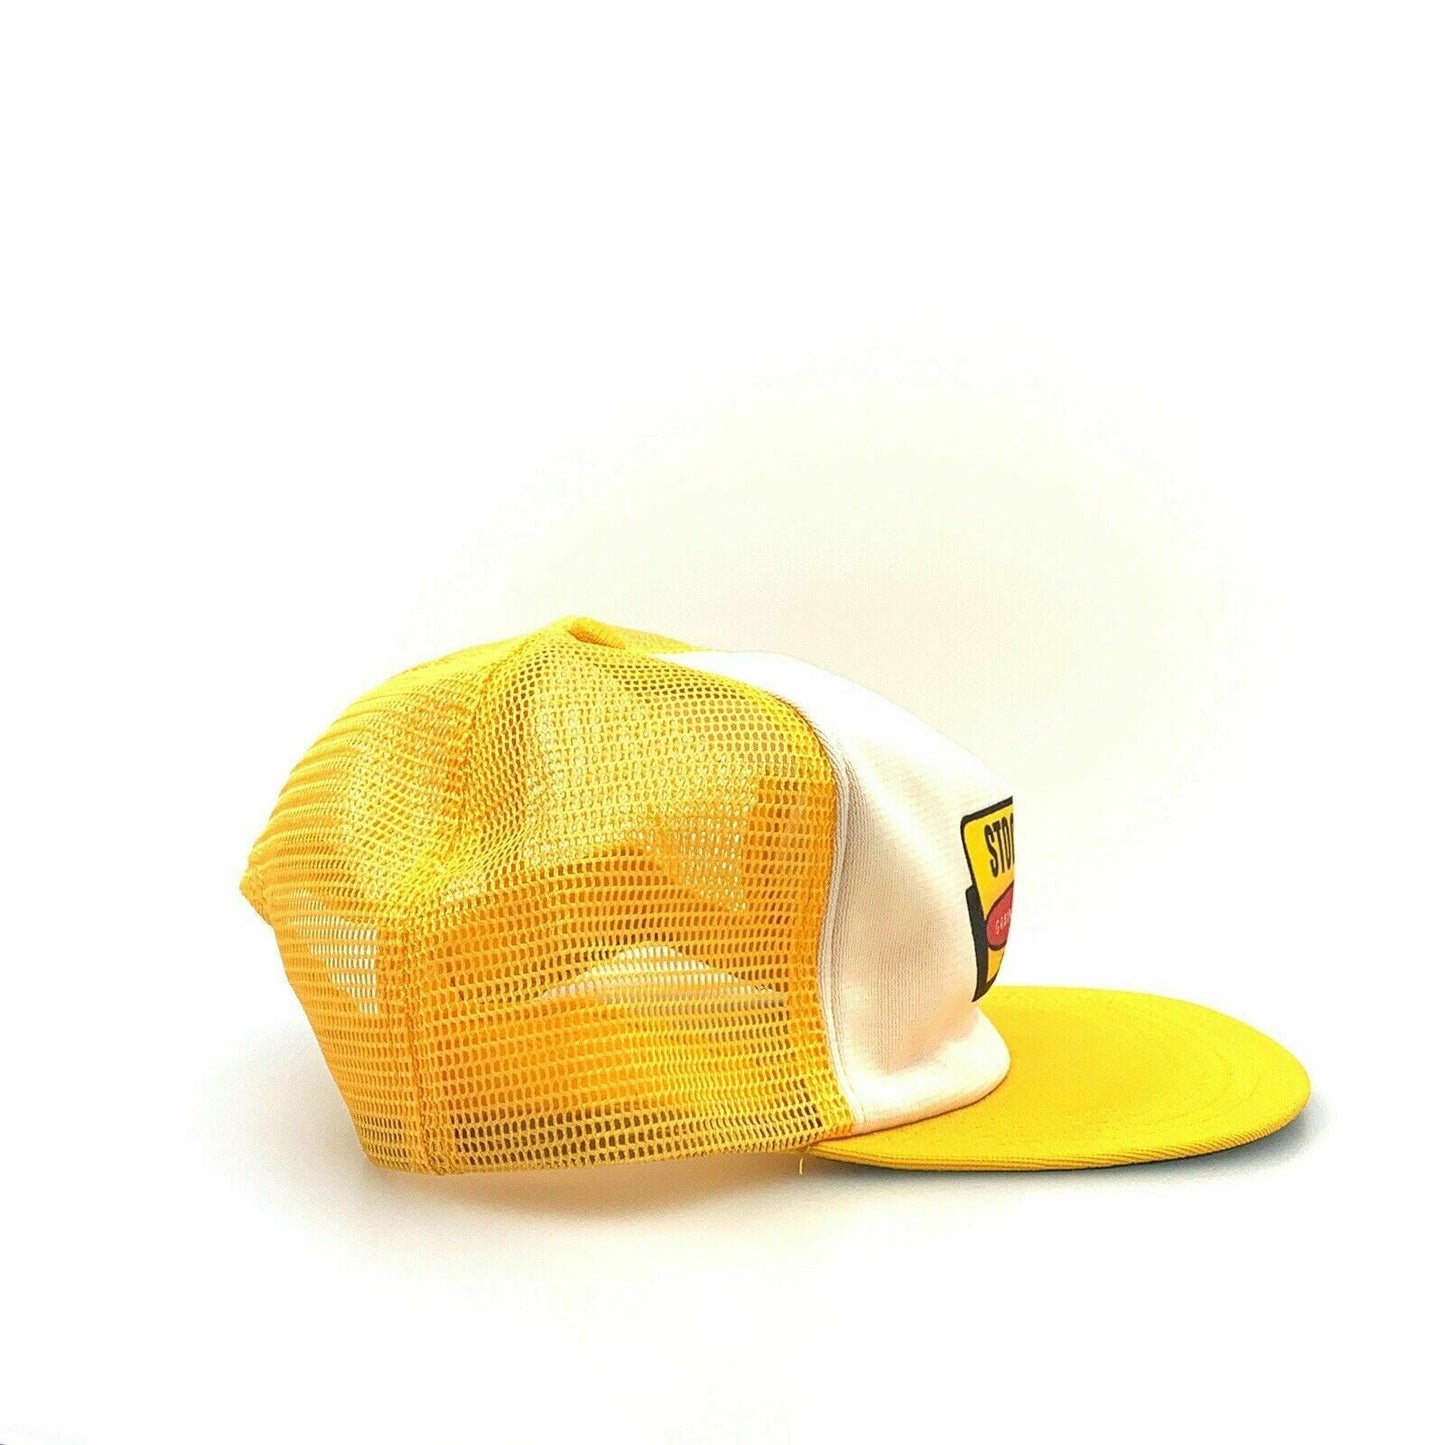 VTG Snap A Tab STOCKDALES GRAIN EQUIPMENT IOWA SnapBack Trucker Hat, Yellow - parsimonyshoppes